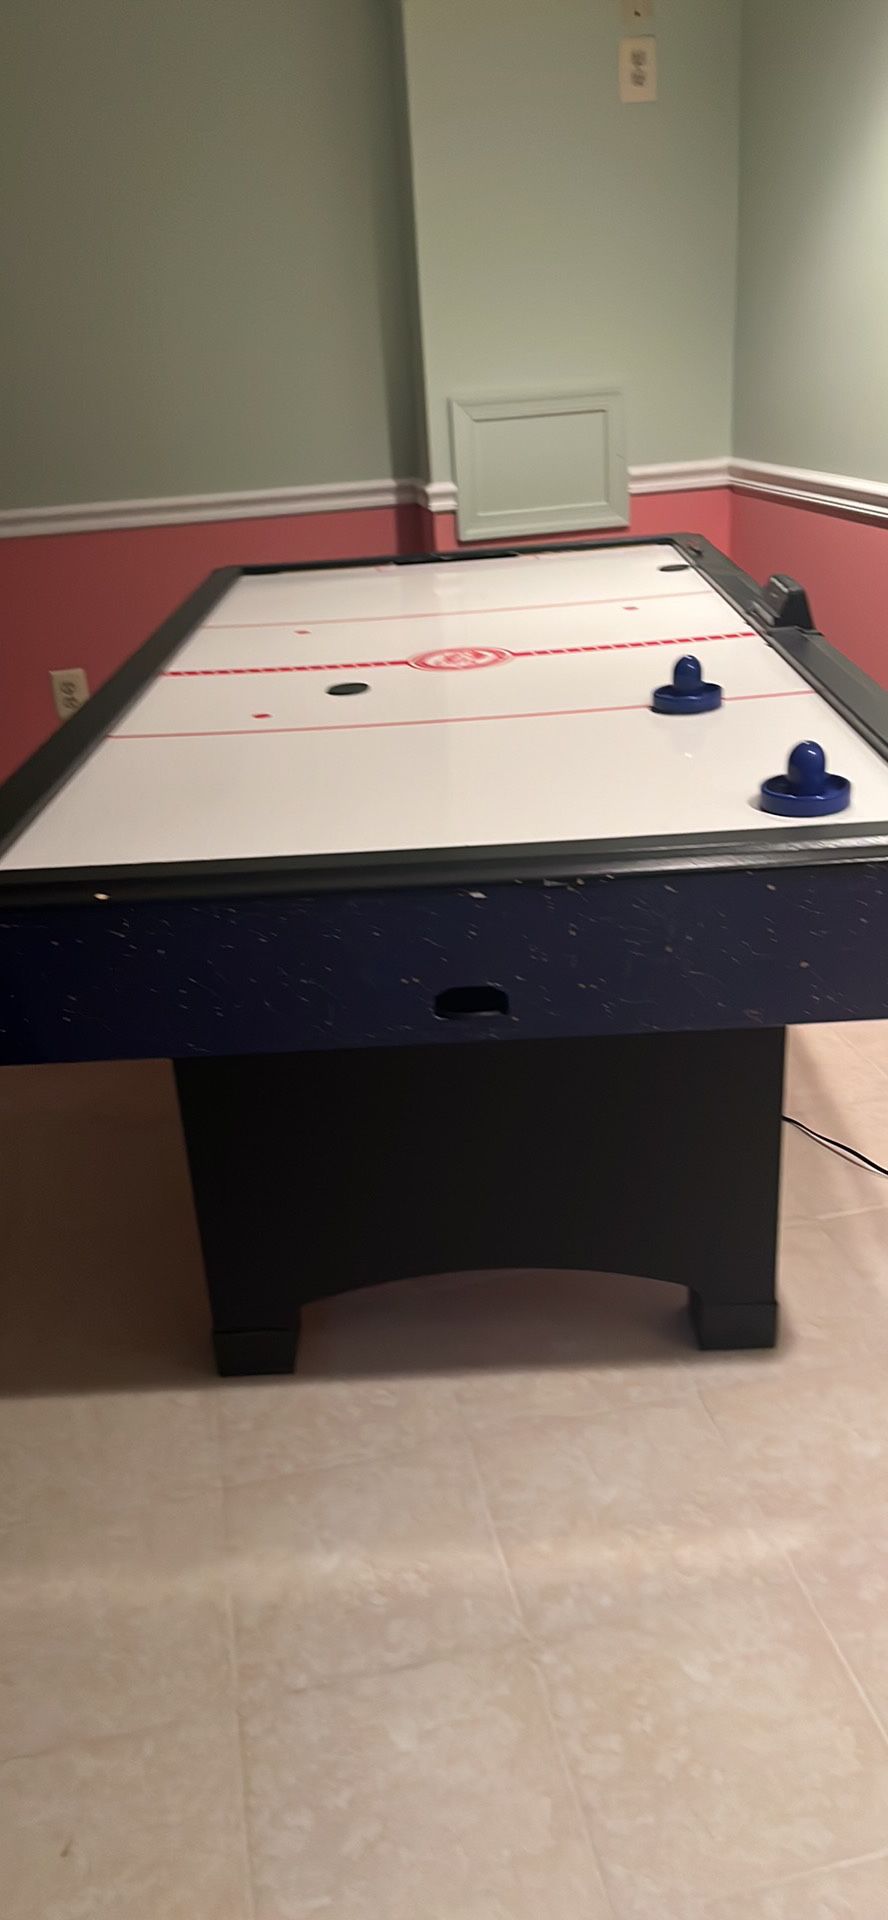 Air Hockey Table ,  Length7 Feet, Width 3.5 Feet , White Color,  169 Dollar Price 